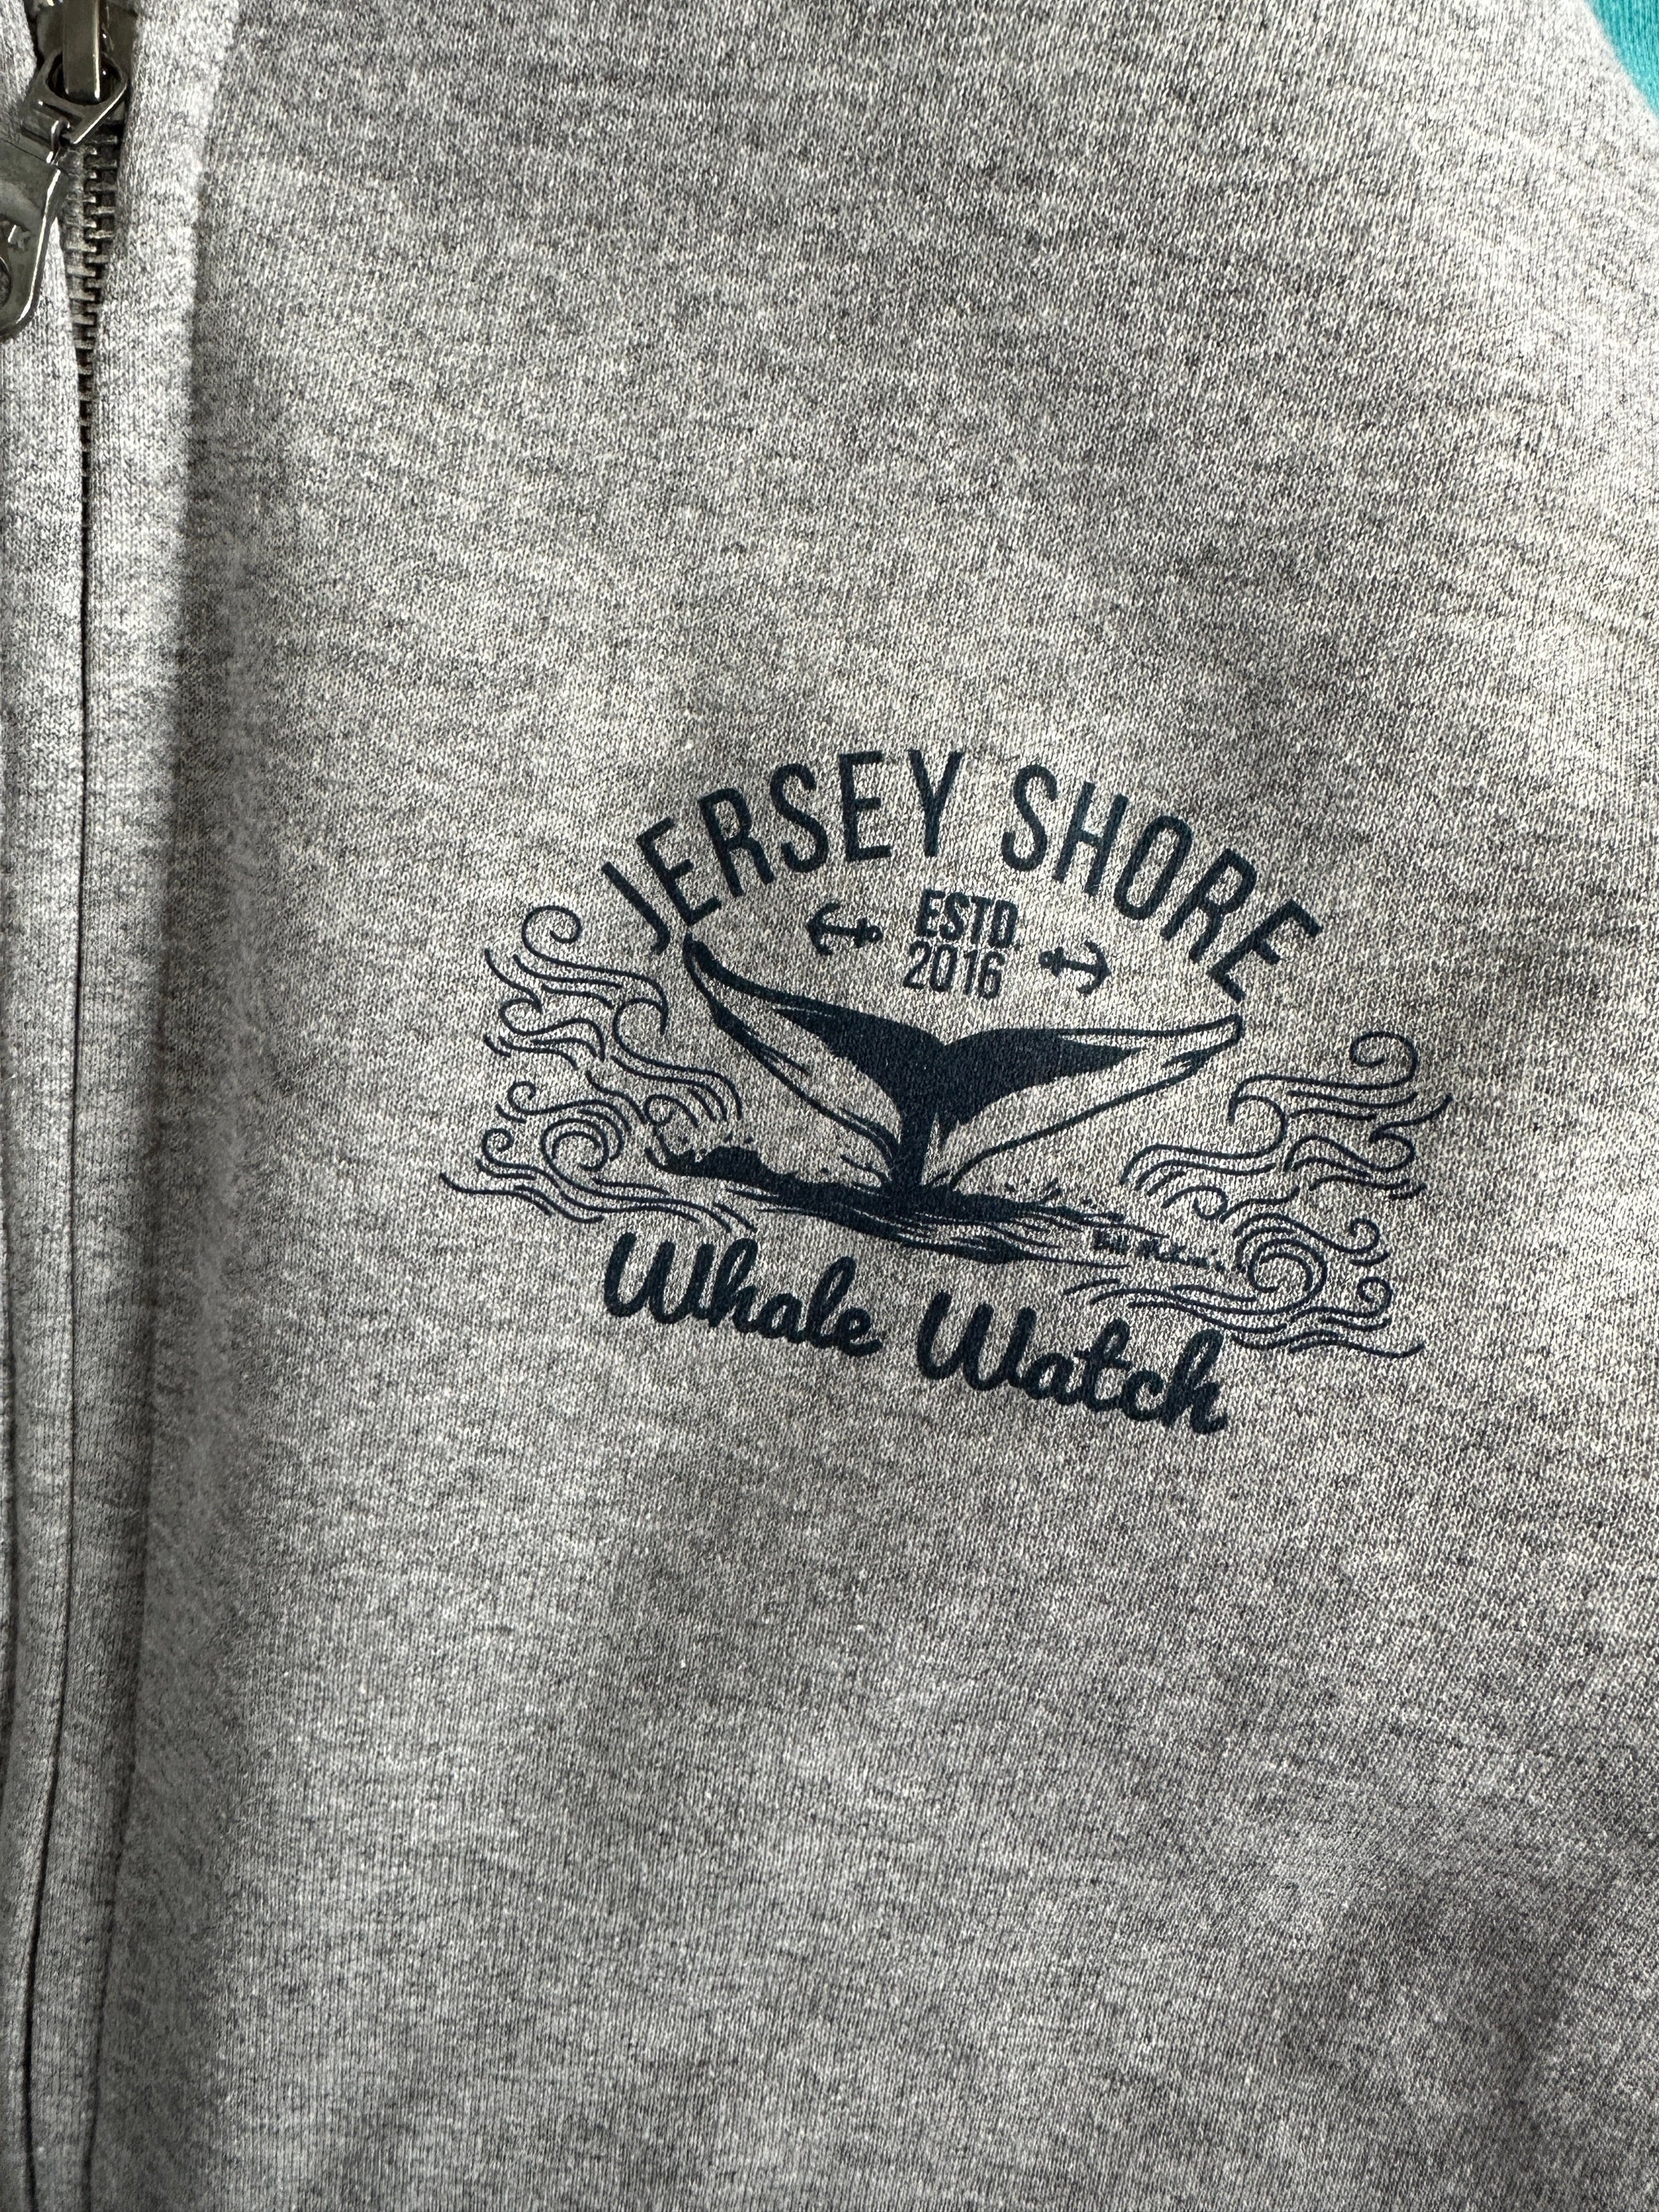 Est. 2016 Design Jersey Shore Whale Watch Sweatshirt printed both sides Bill McKim Photography MEDIUM Heather Grey 